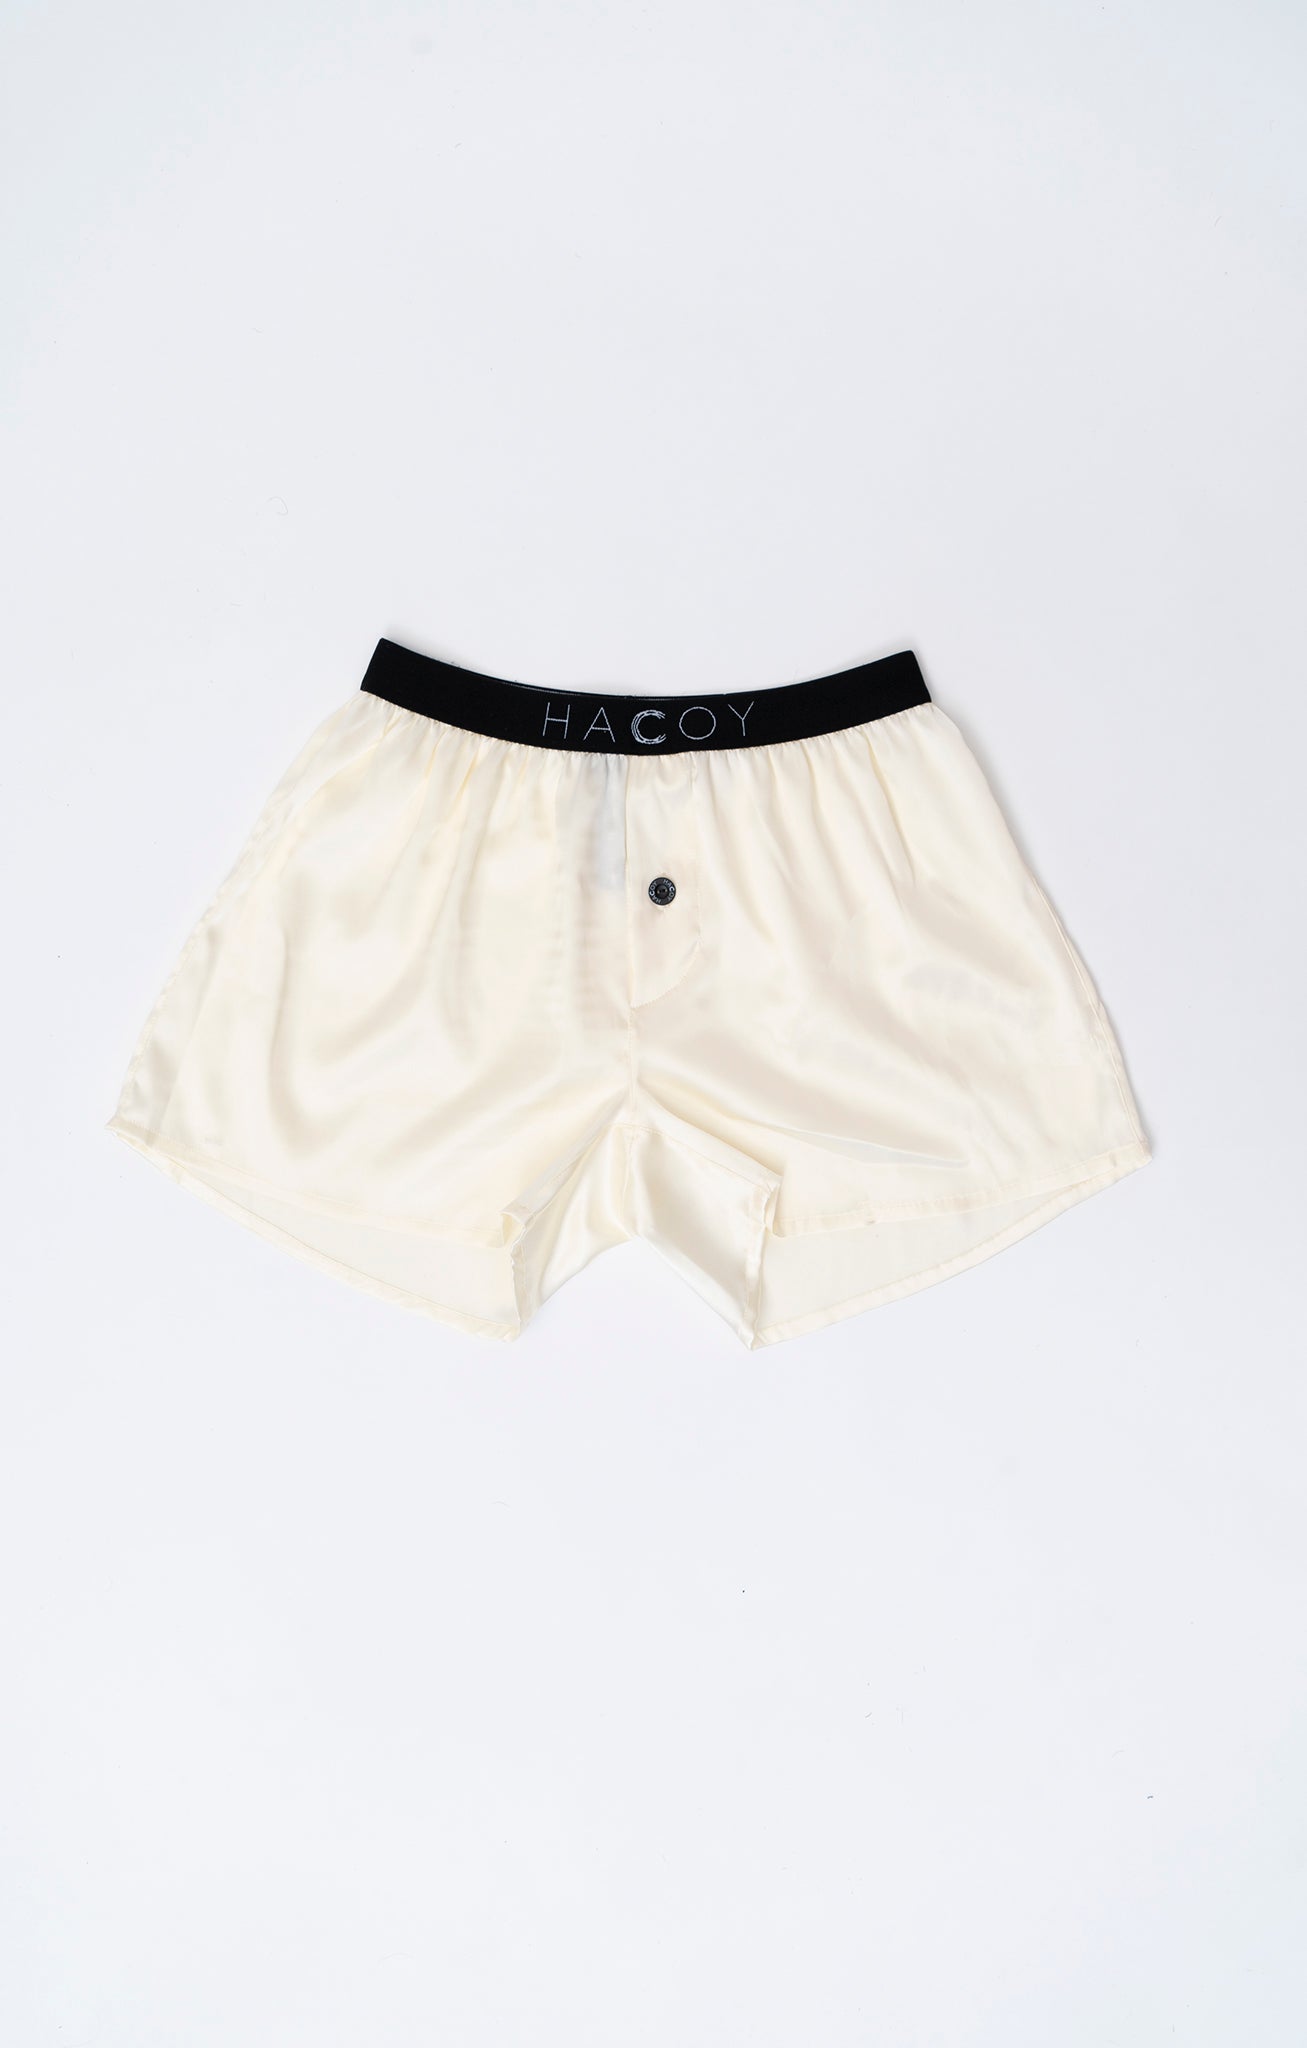 Silk Boxer Shorts